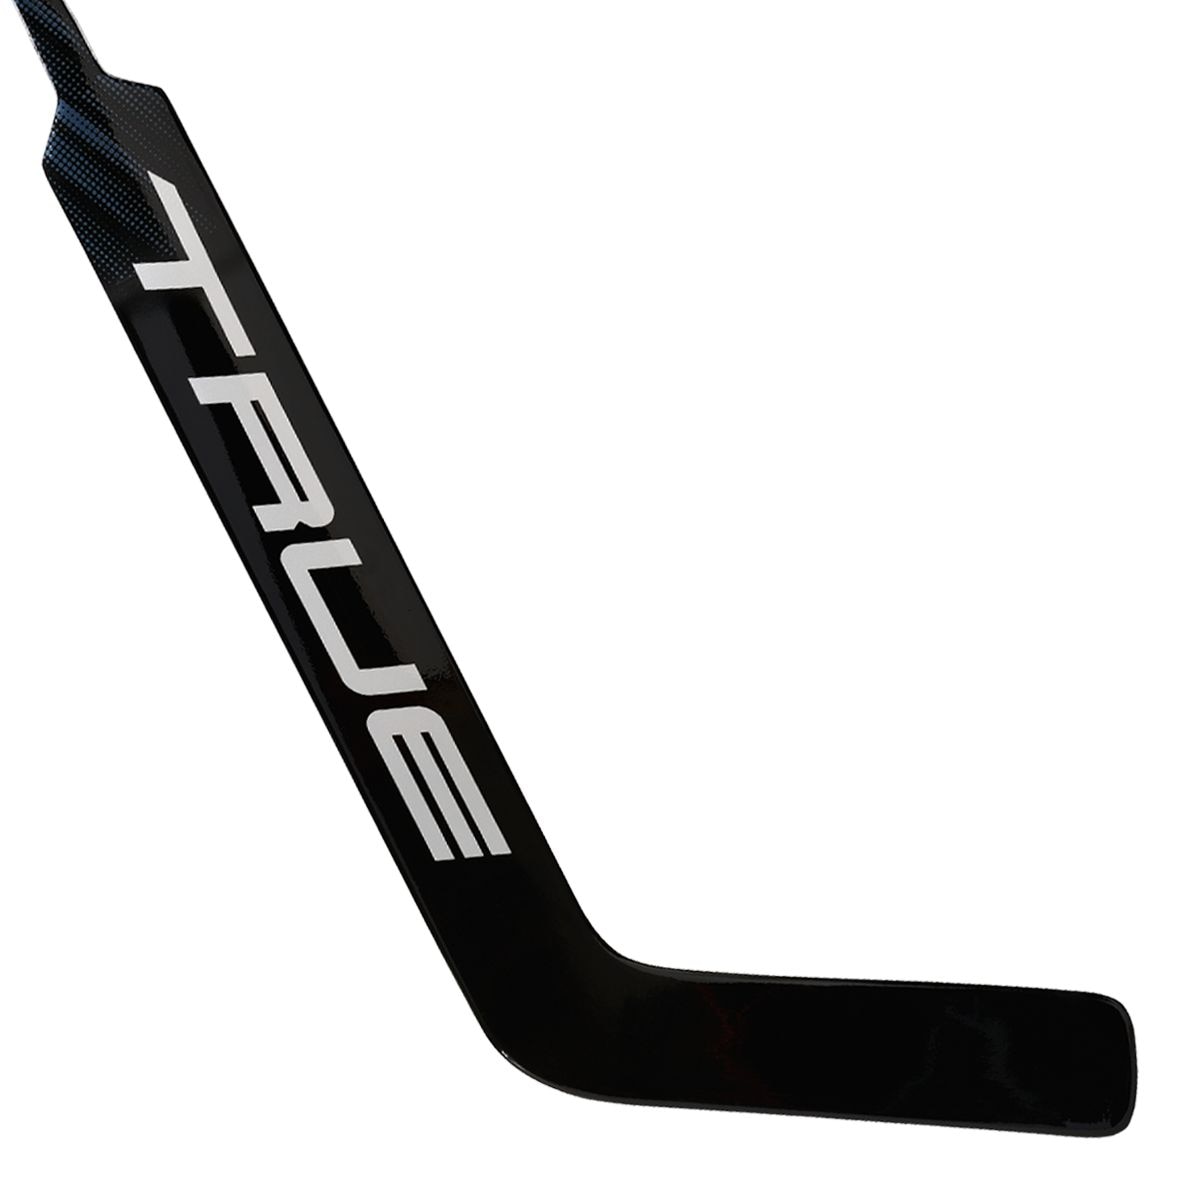 New True Intermediate CATALYST 5 Ice Hockey Sticks / Intermediate